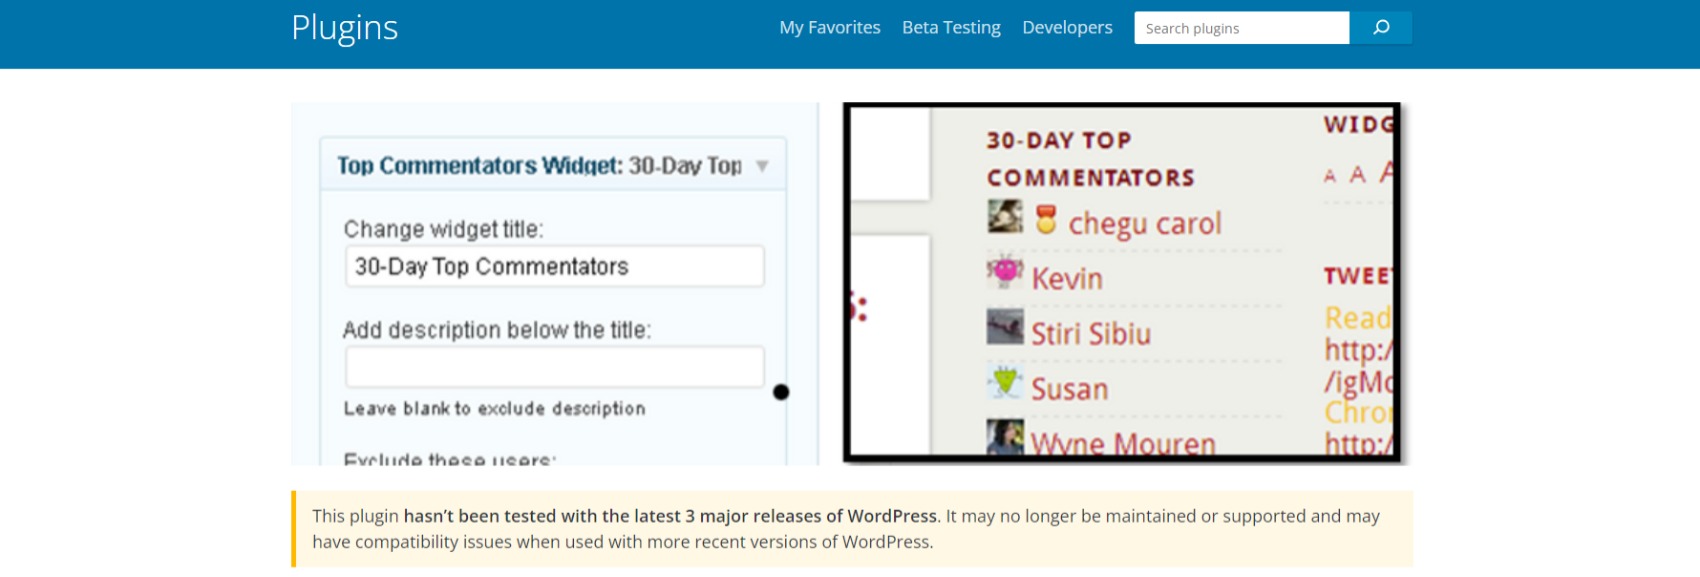 Best WordPress Plugins list: Show Top Commentators